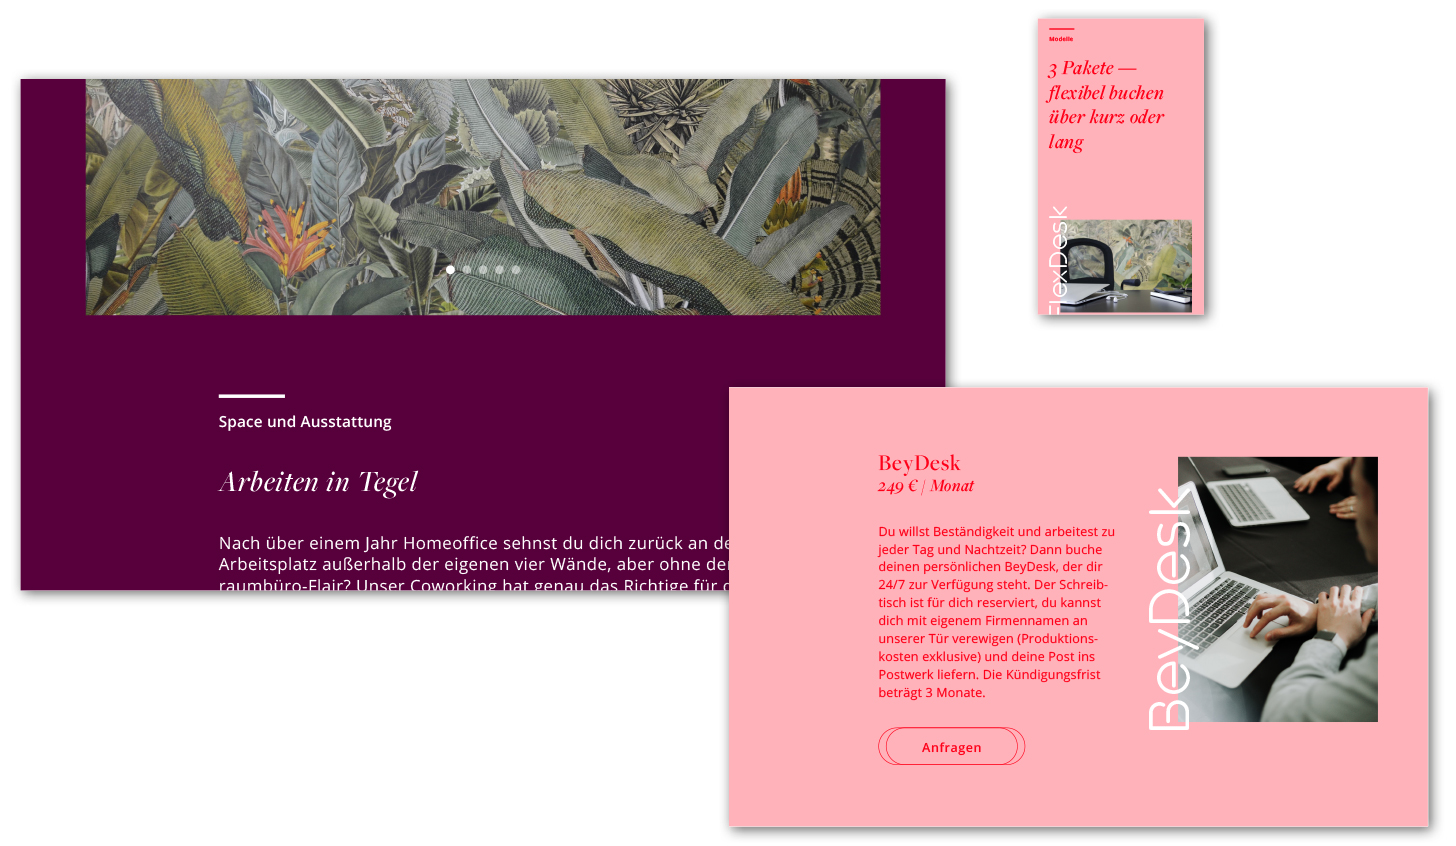 beydes-susannihlenfeld-website-design-coworking-4